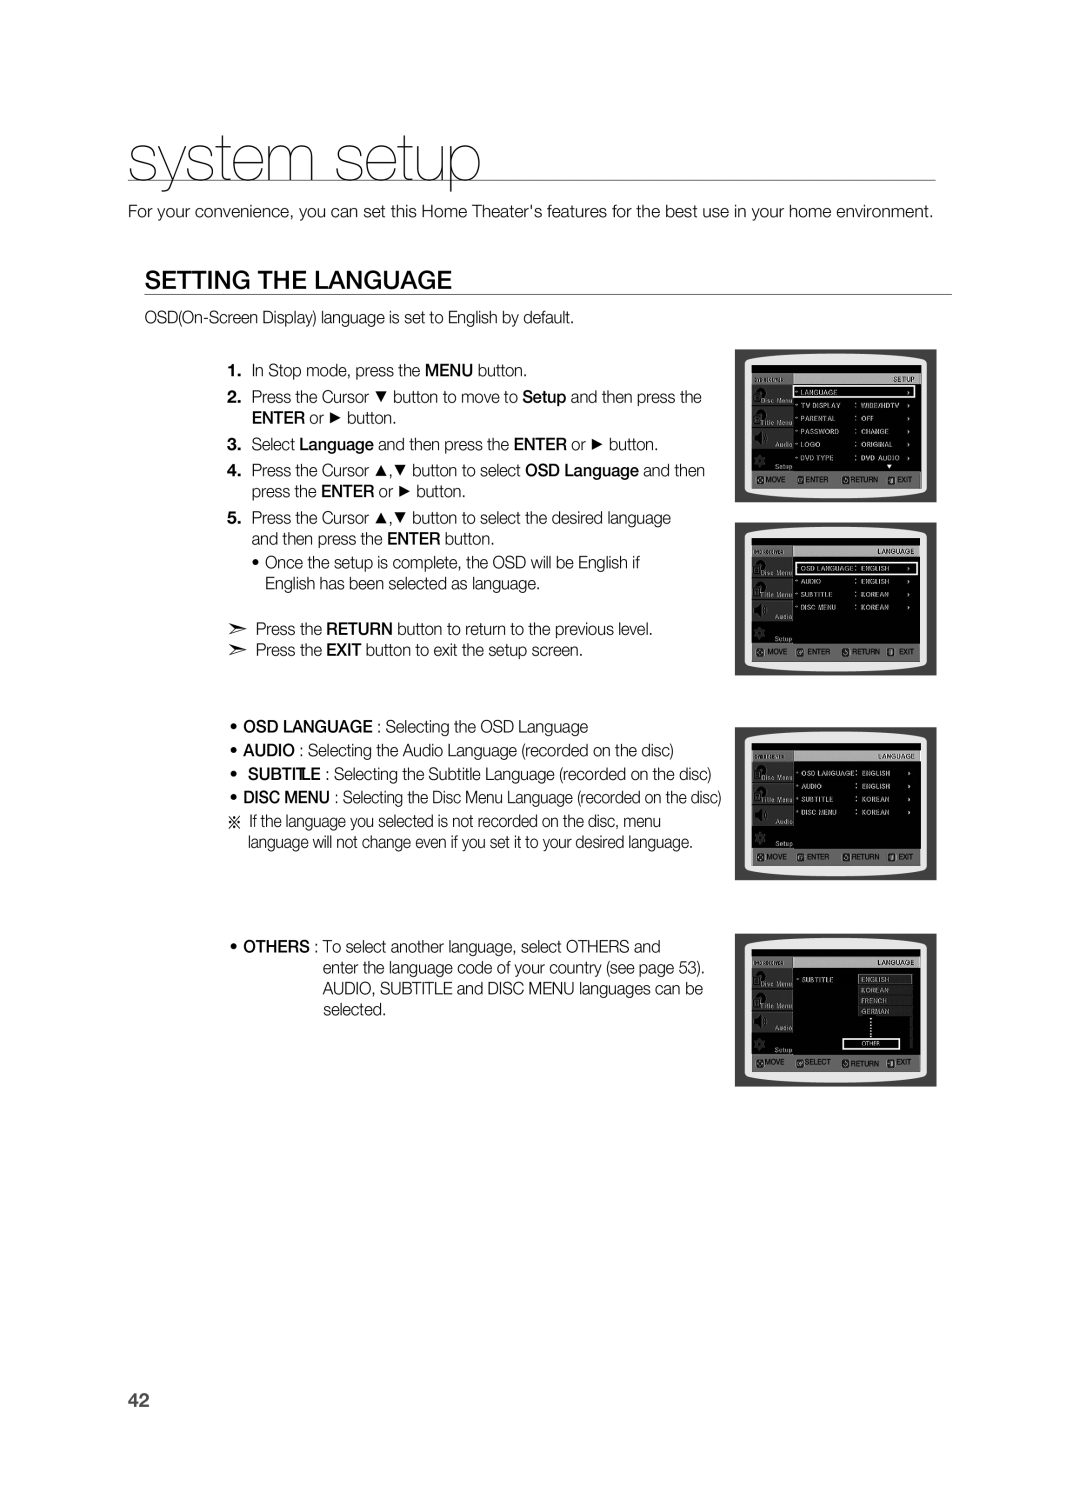 Samsung HT-A100 user manual system setup, Setting the Language 